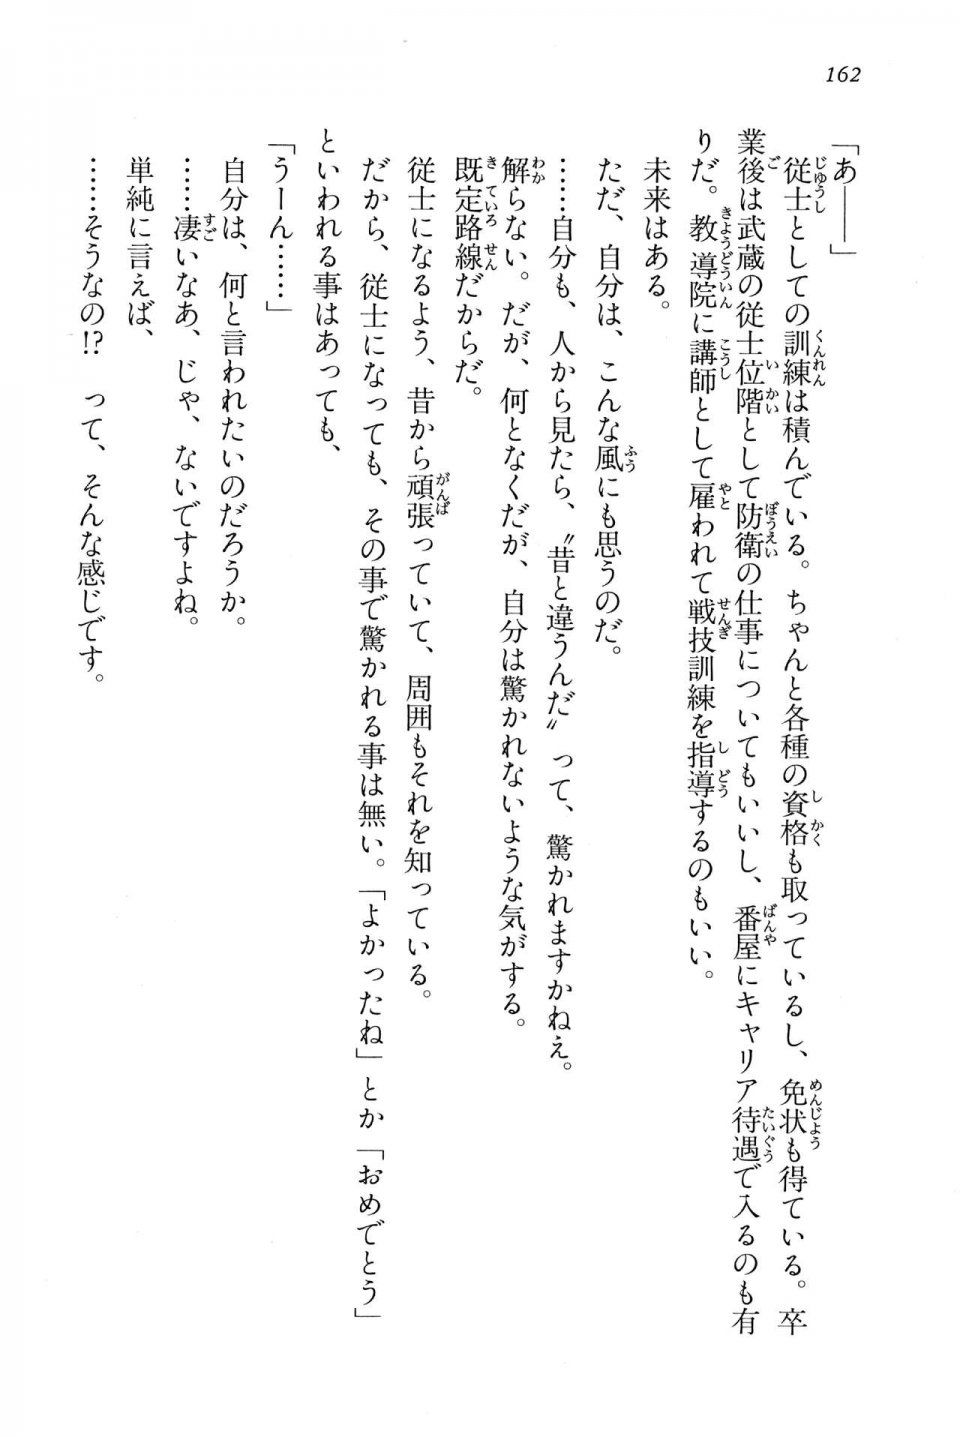 Kyoukai Senjou no Horizon BD Special Mininovel Vol 6(3B) - Photo #166